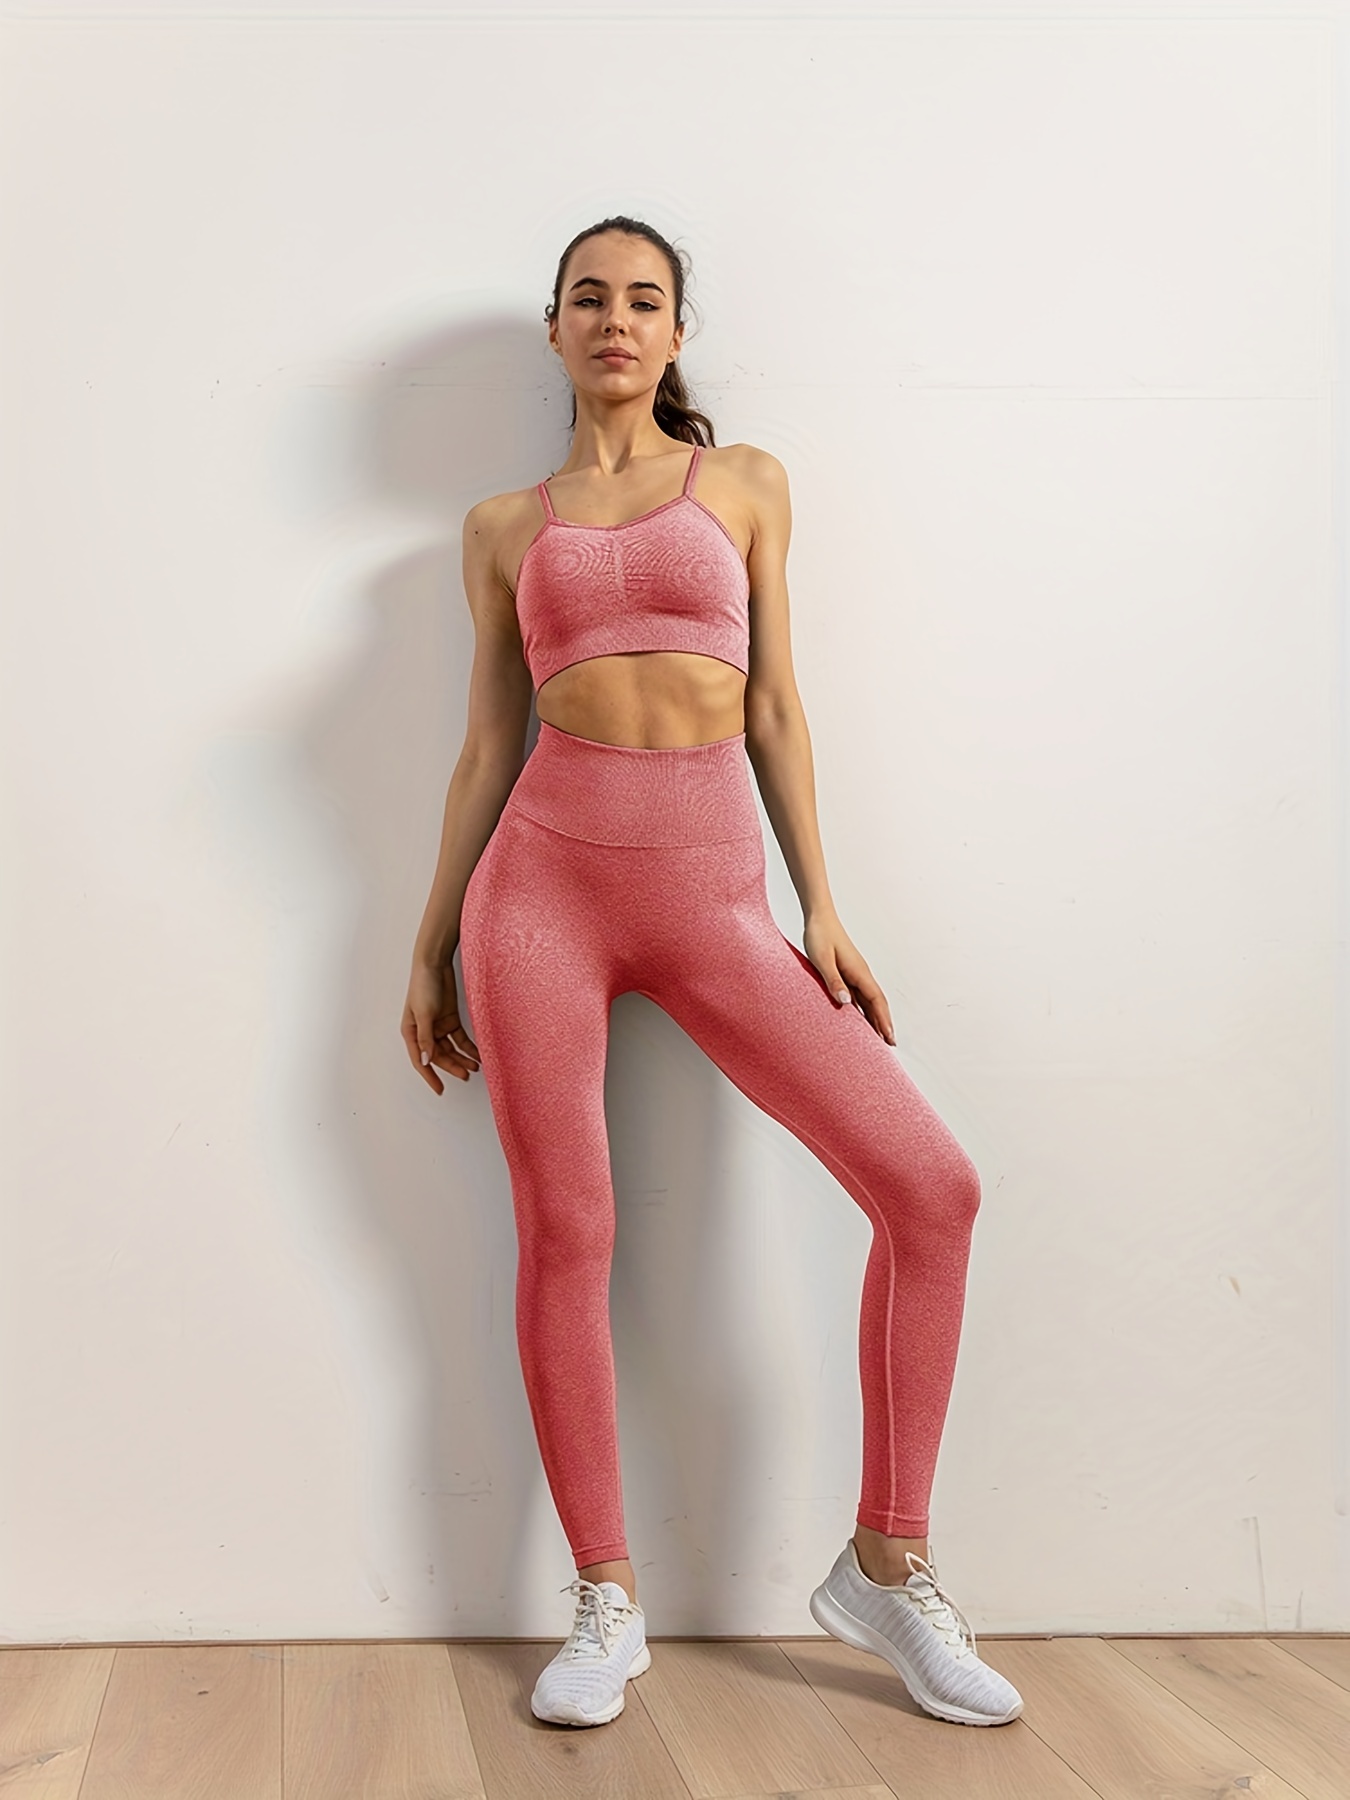  GYMSHARK Vital Seamless - Leggings de fitness para mujer, color  naranja, Naranja : Ropa, Zapatos y Joyería